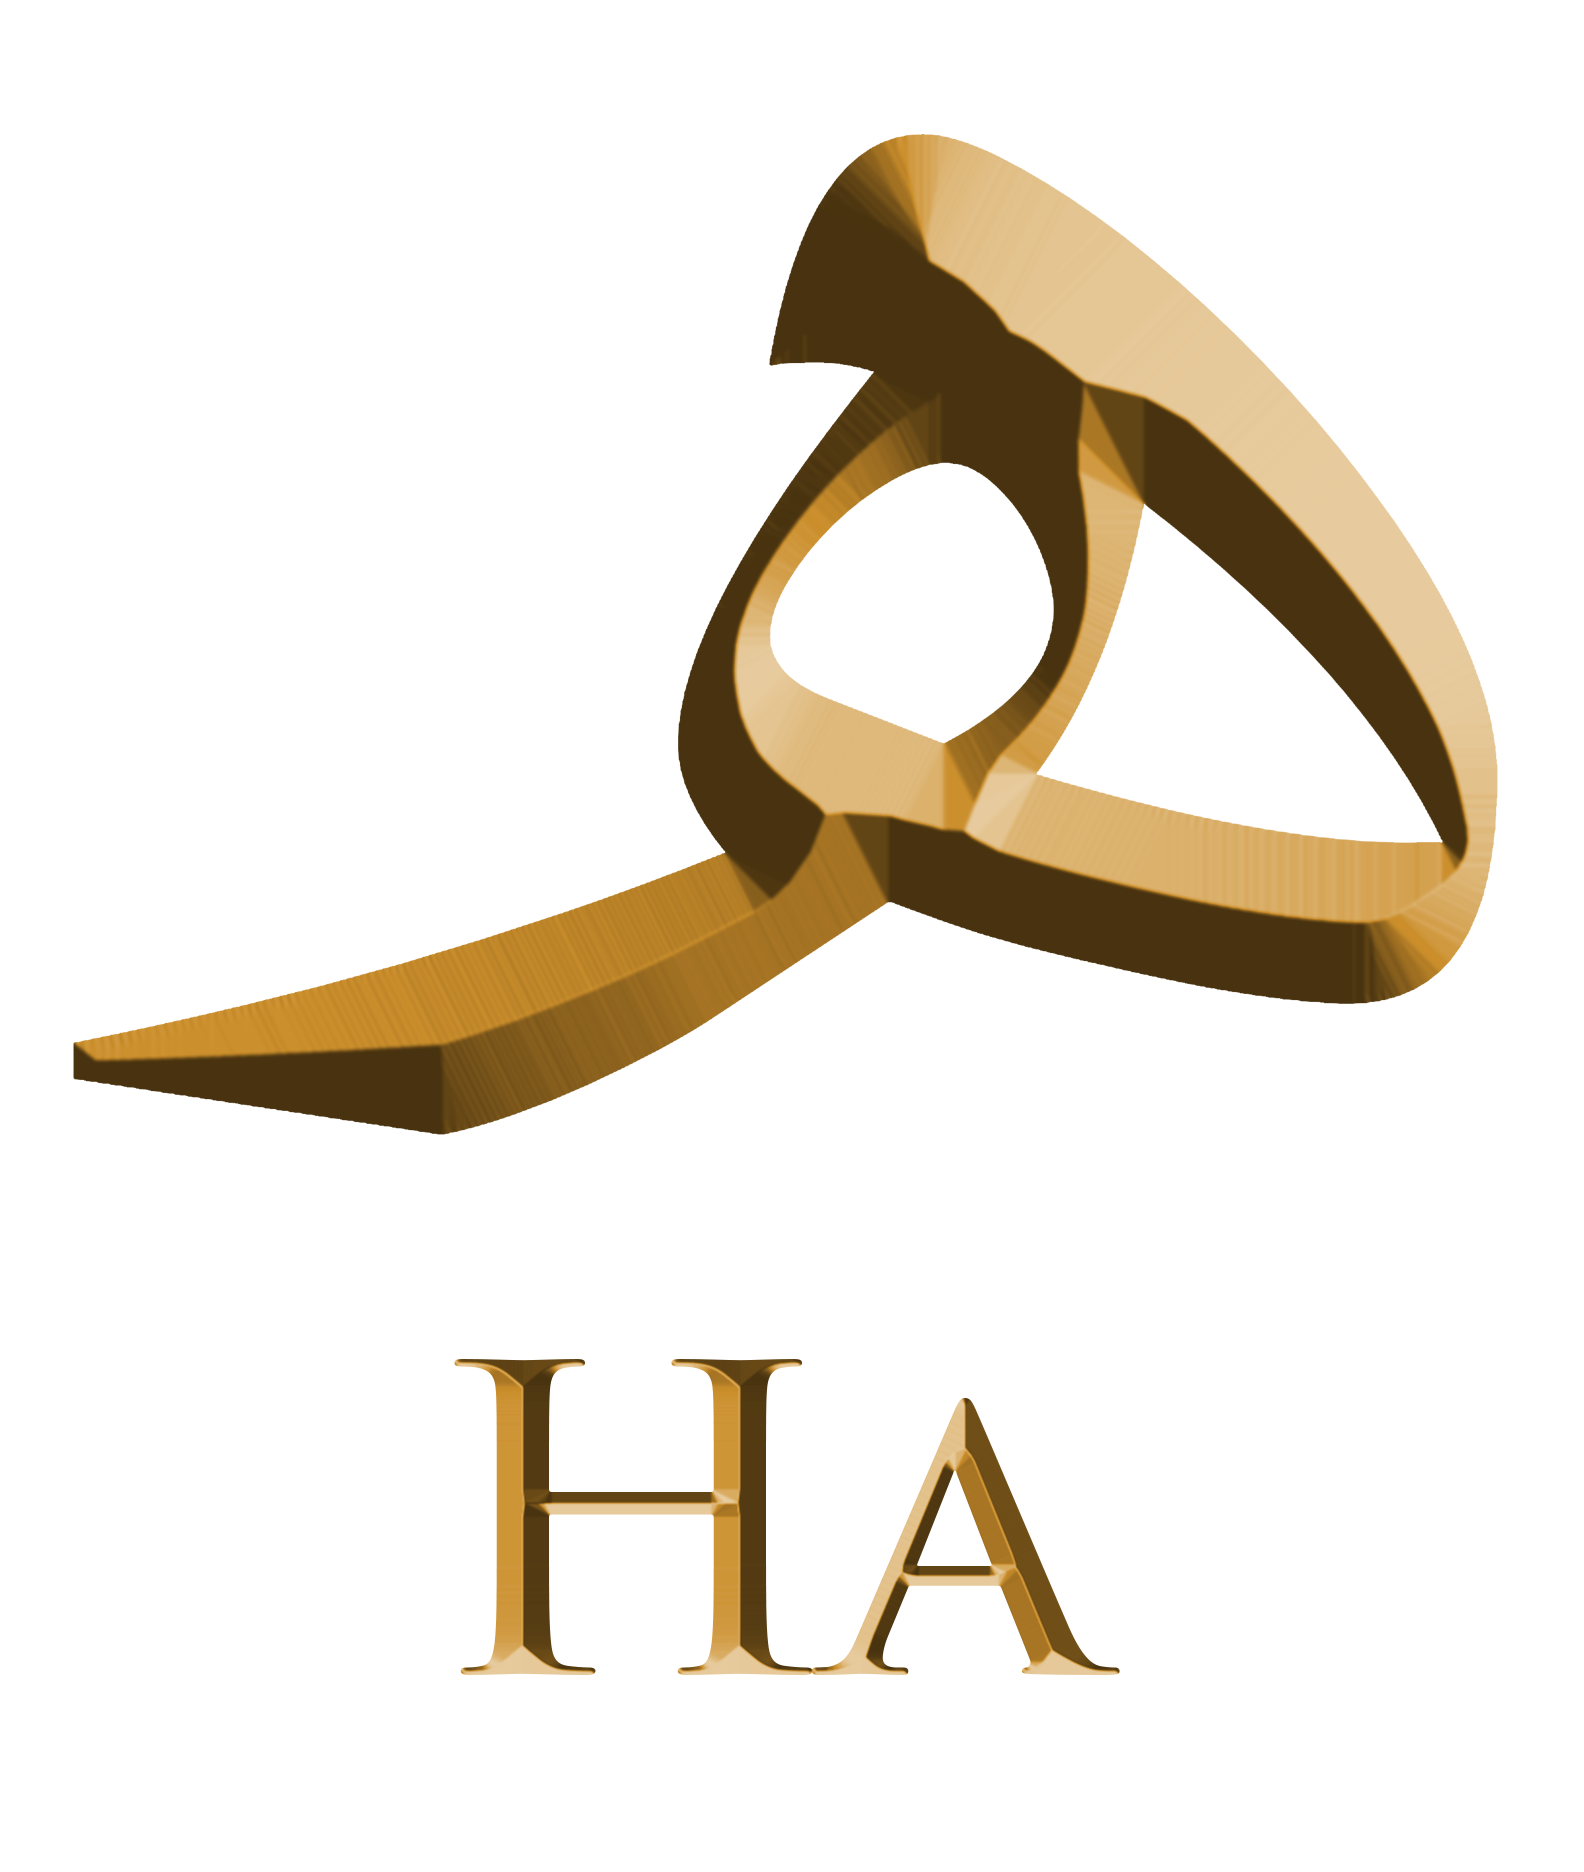 Haa - Arabic Letter